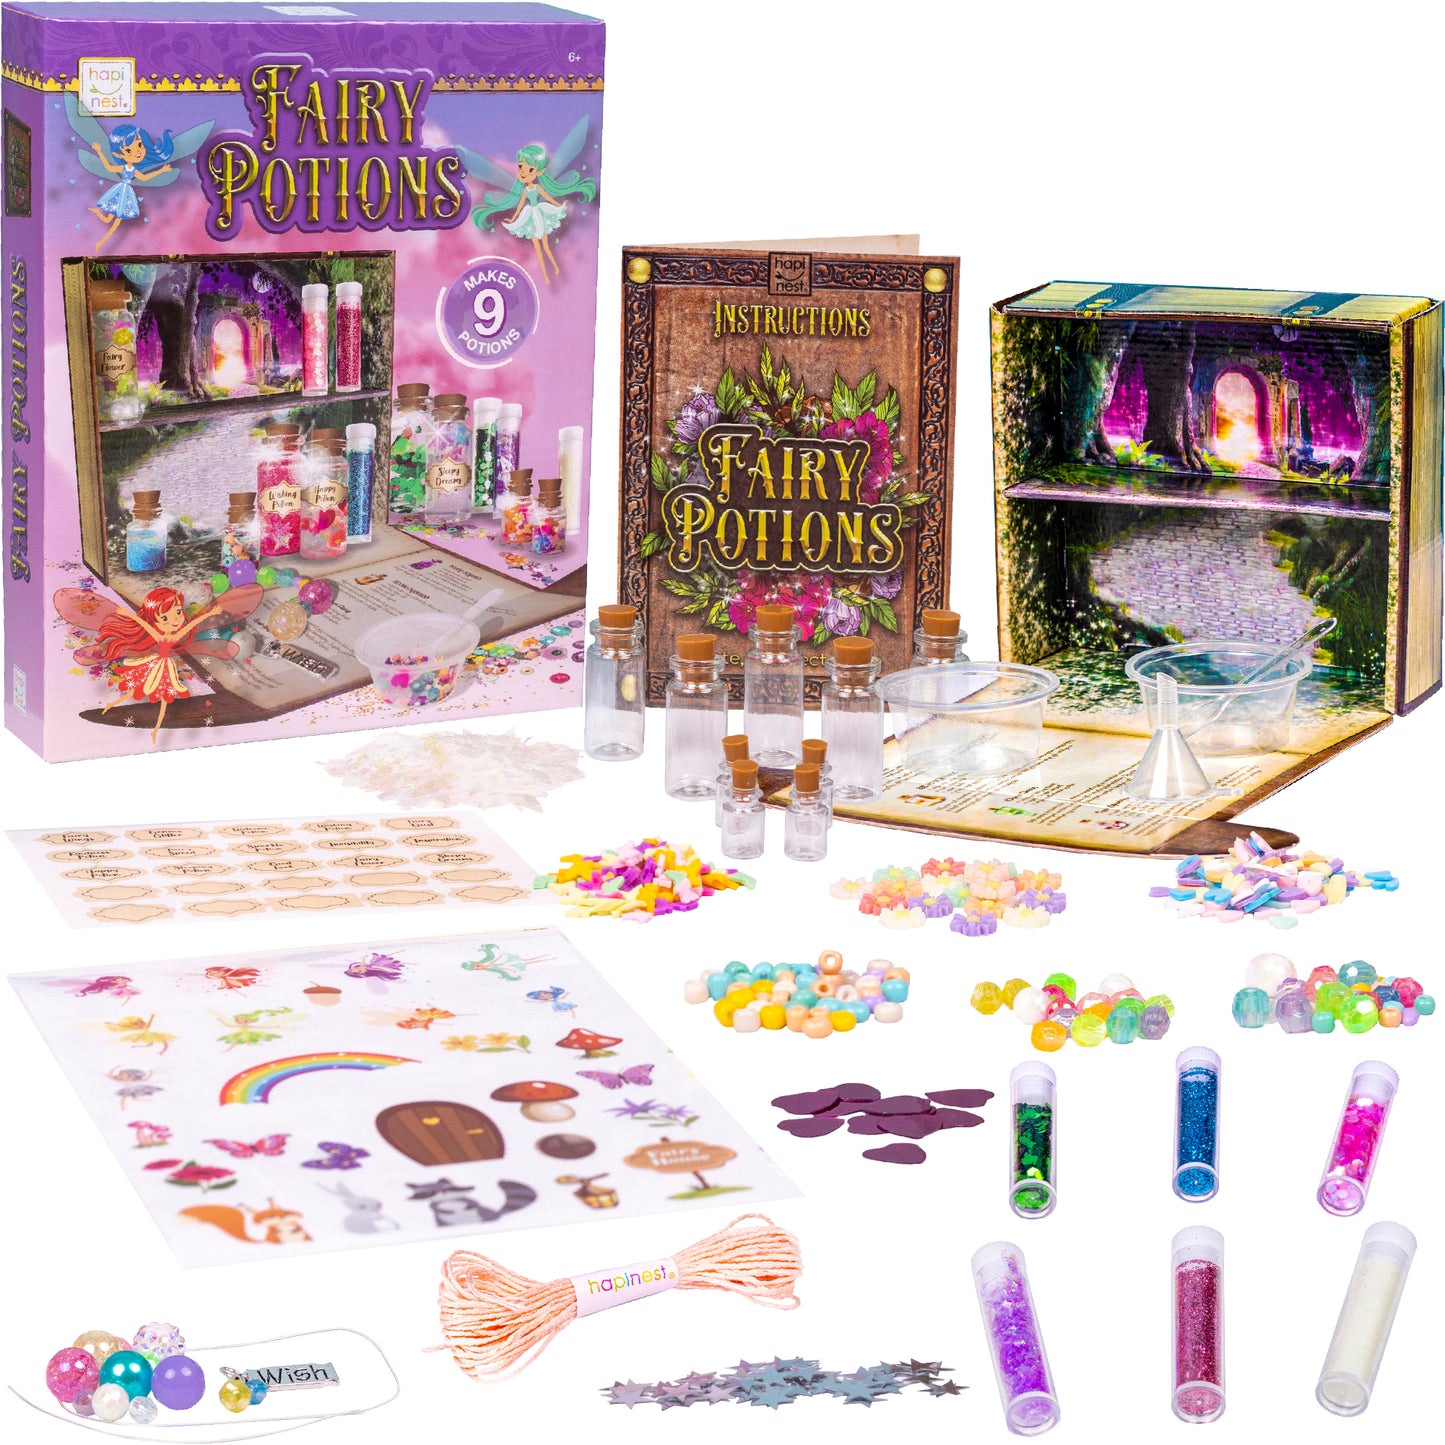 DIY Fairy Potions - Craft Kit